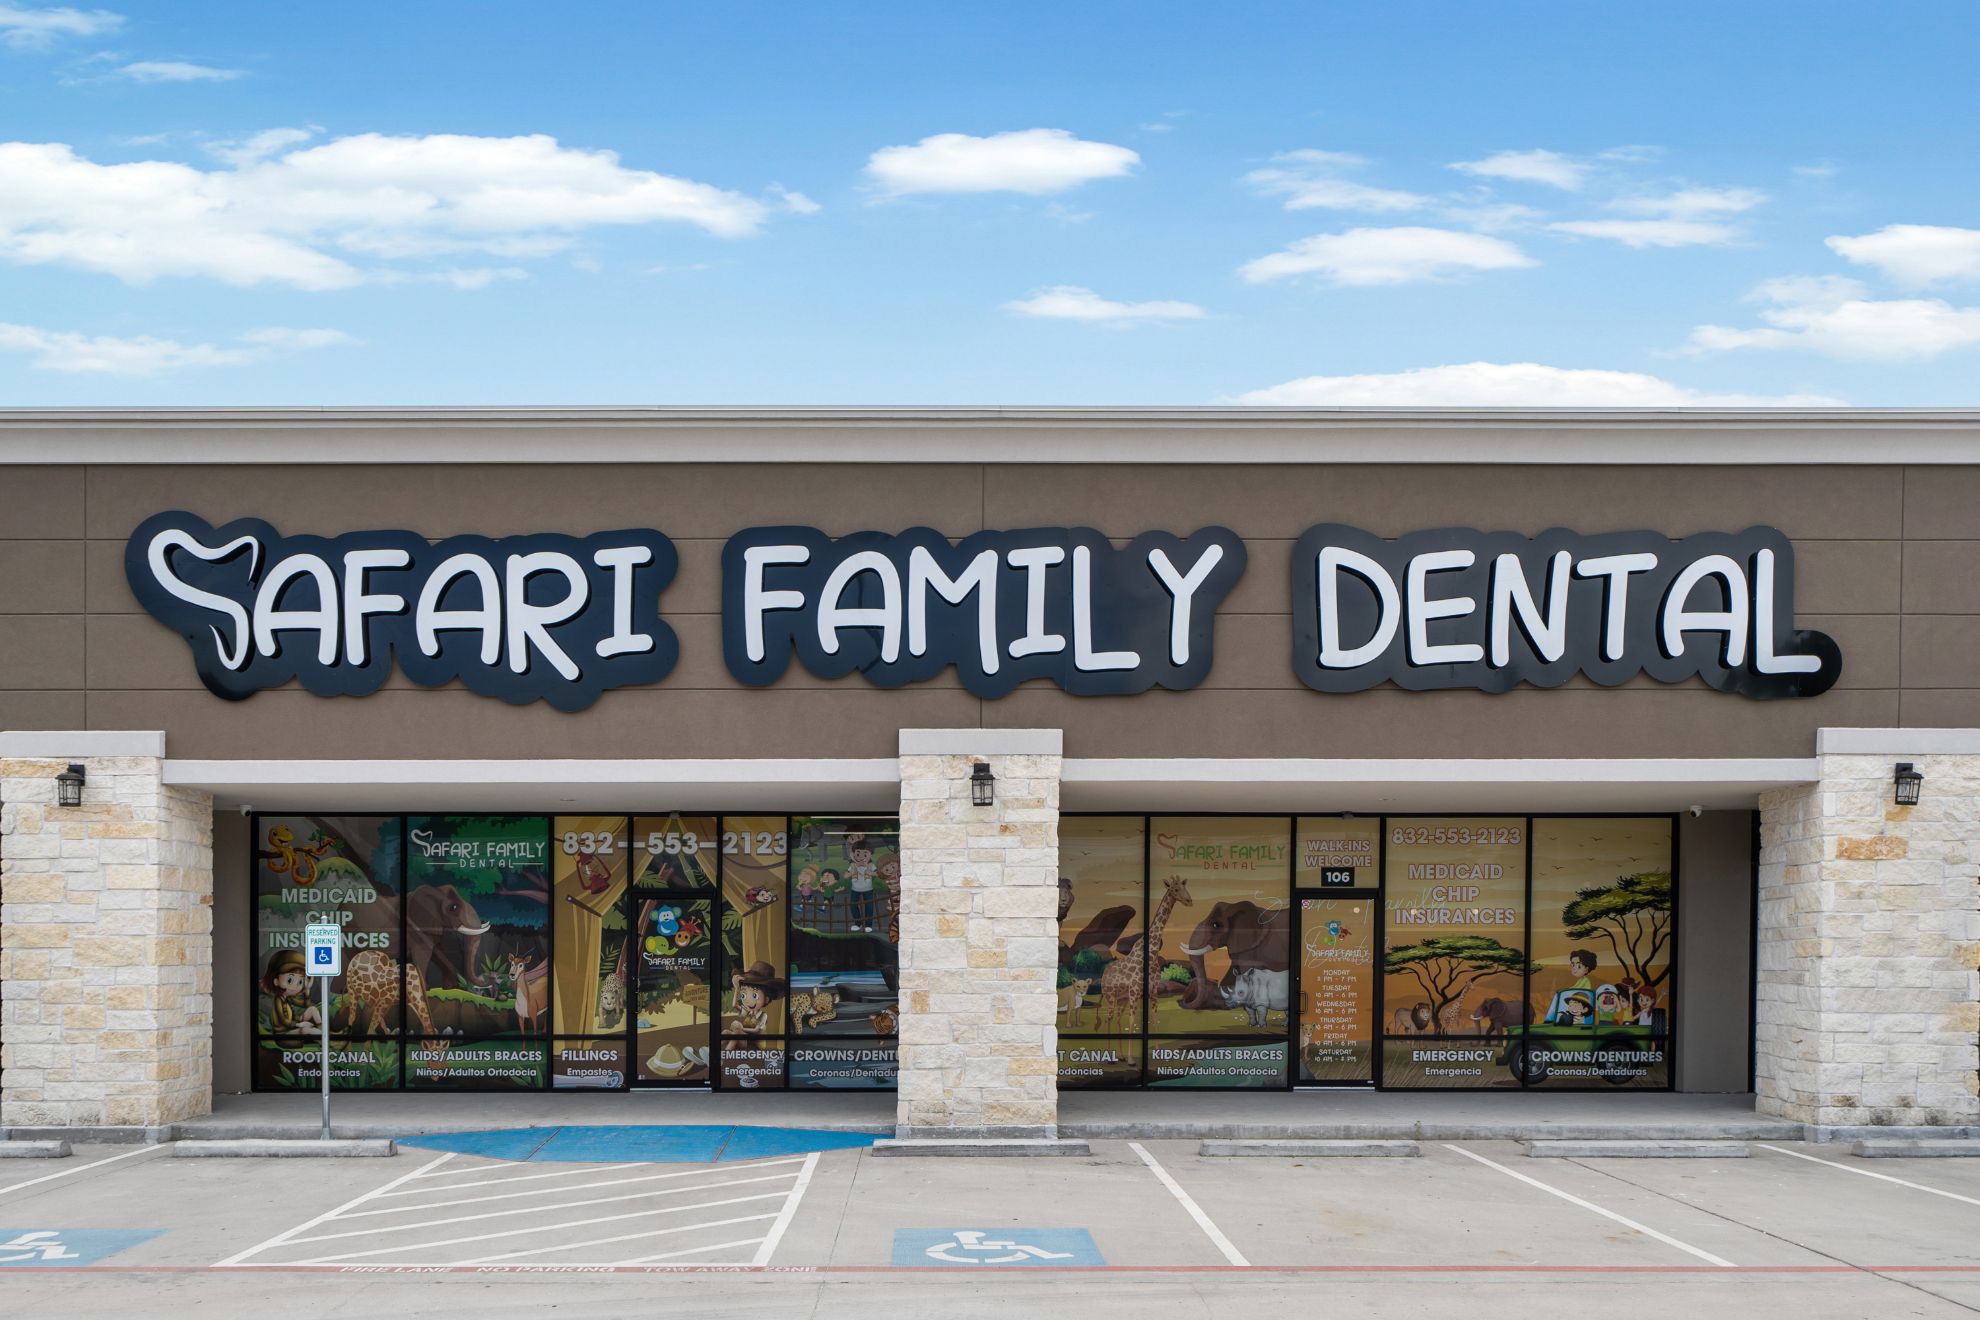 safari family dental & orthodontics houston reviews